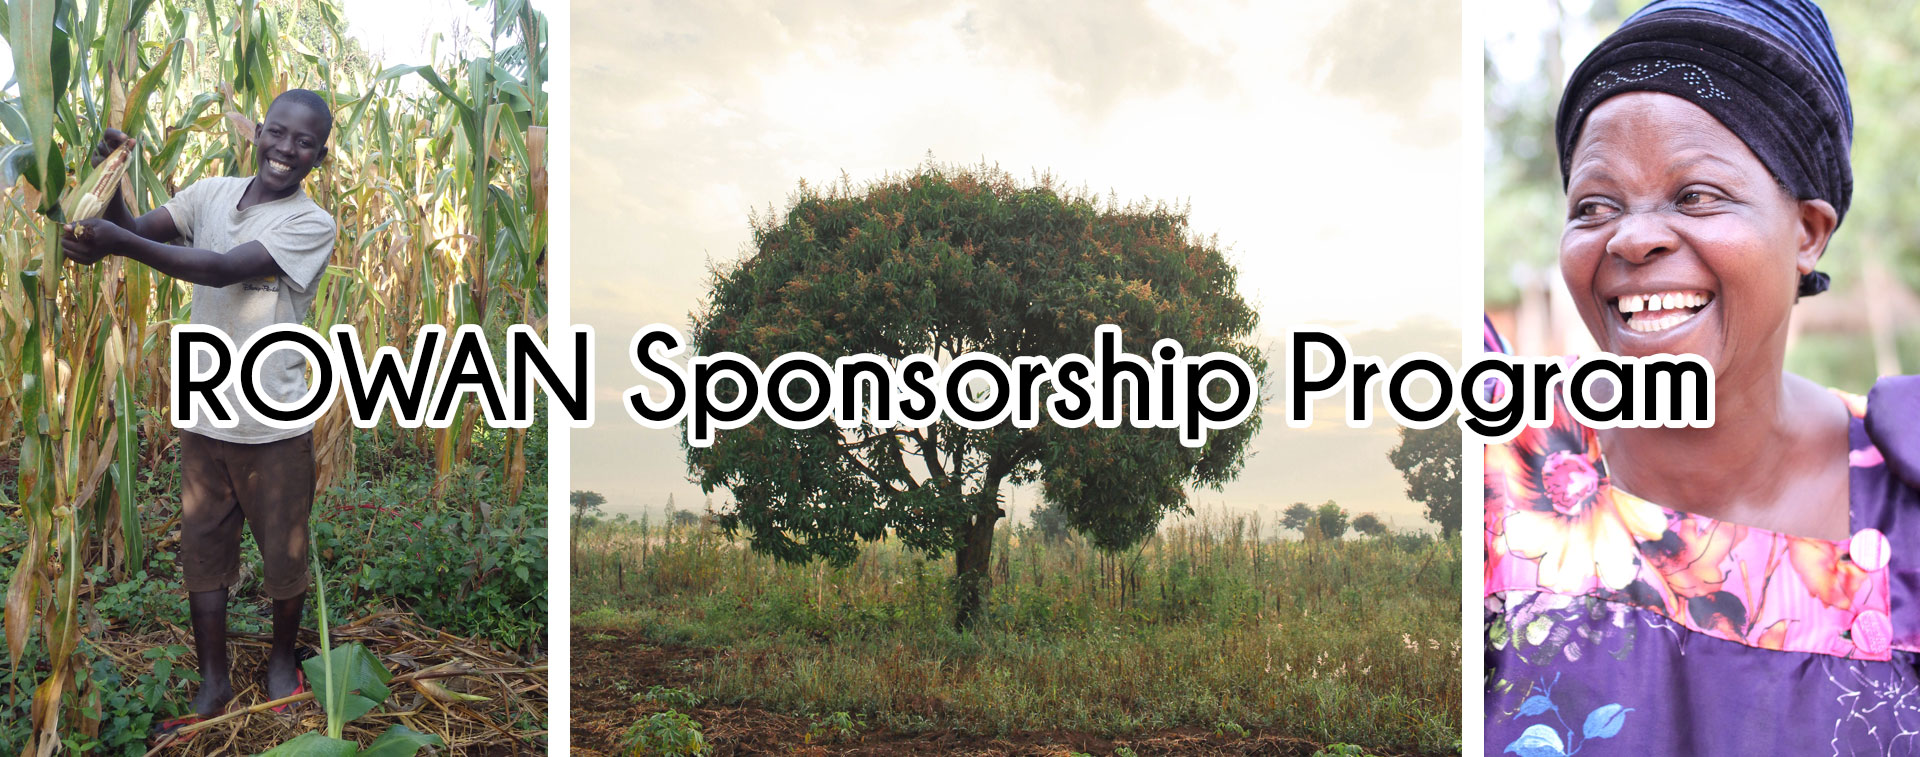 ROWAN sponsorship program